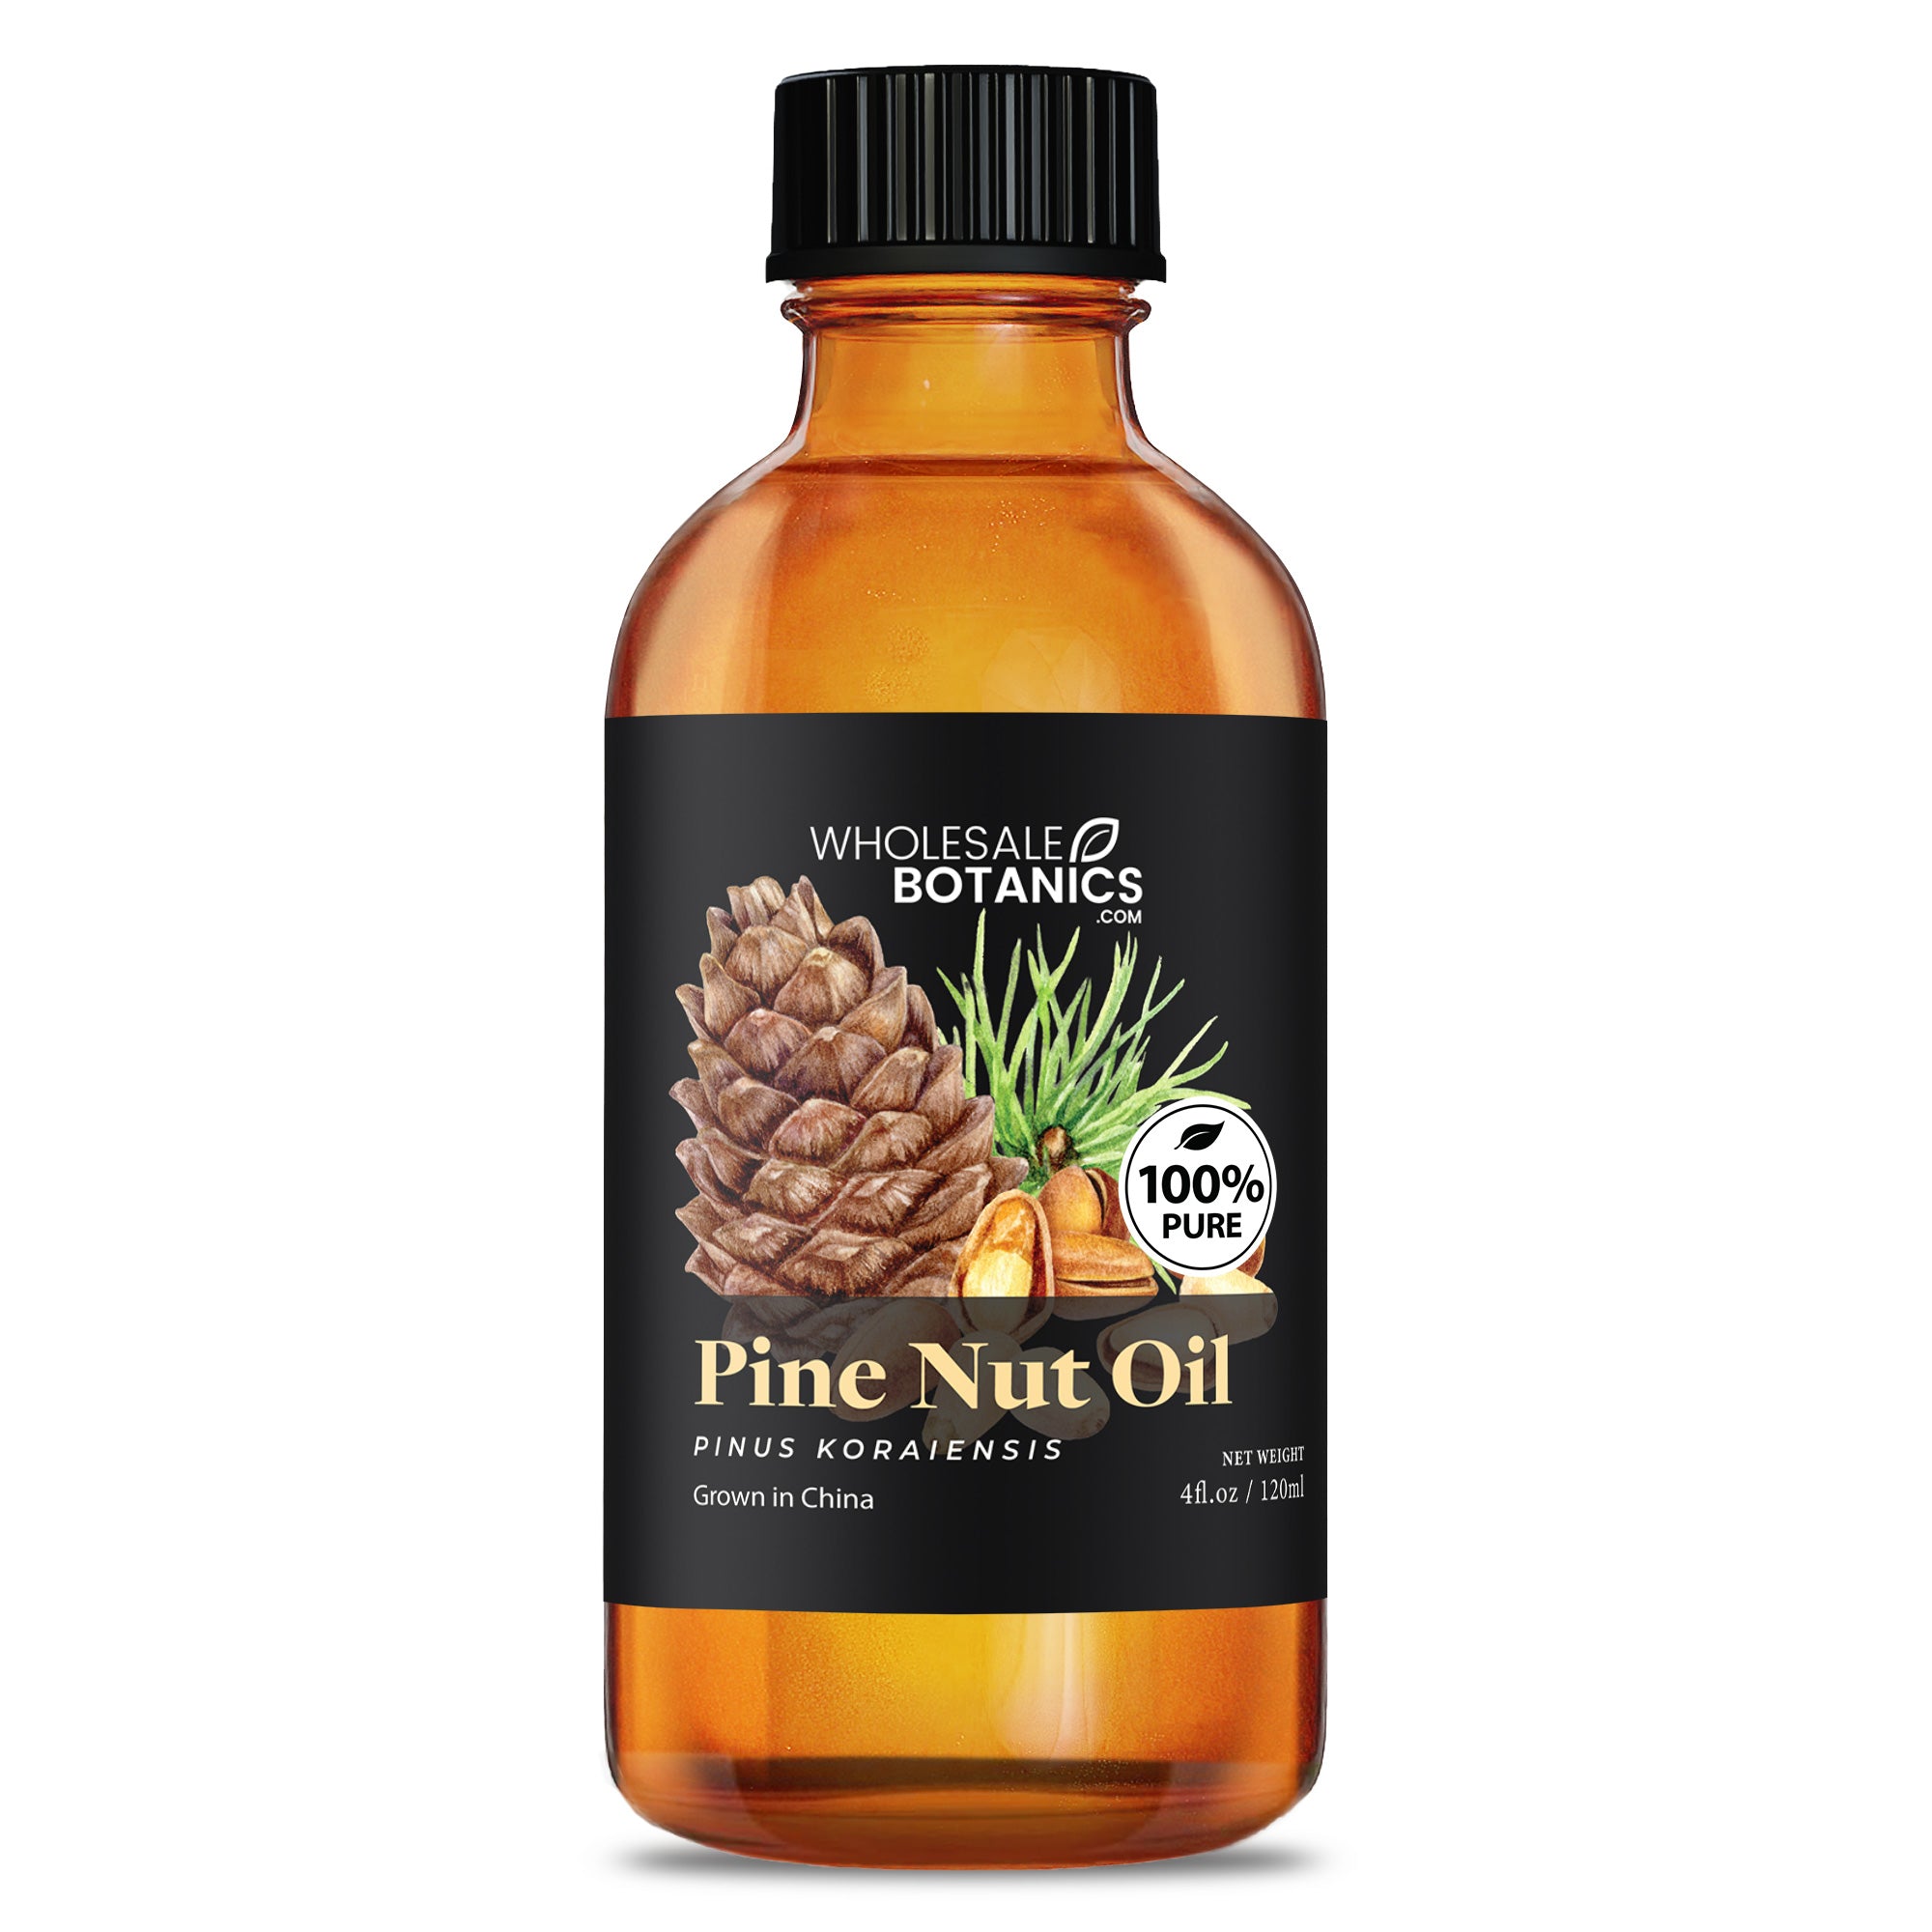 Pine Nut Oil